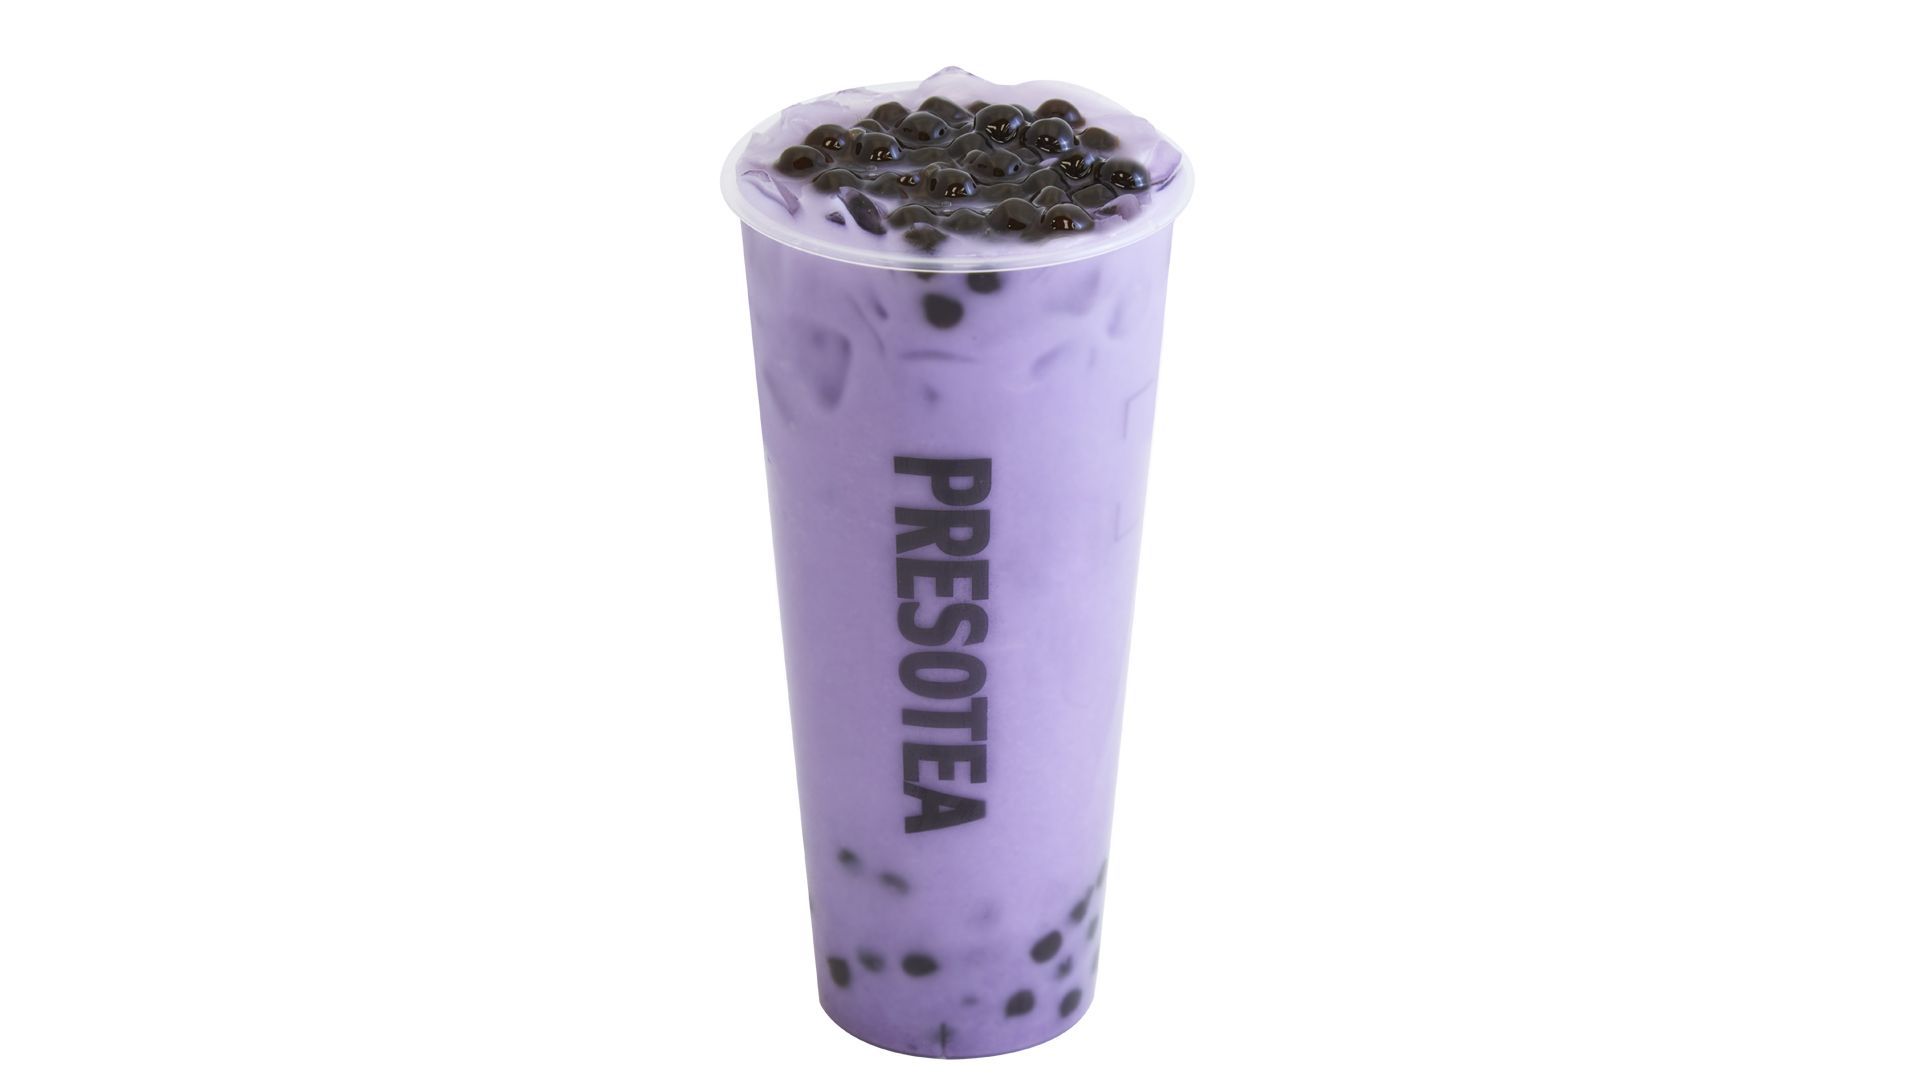 Taro au lait avec perles de tapioca / Milky Taro with Black Pearl